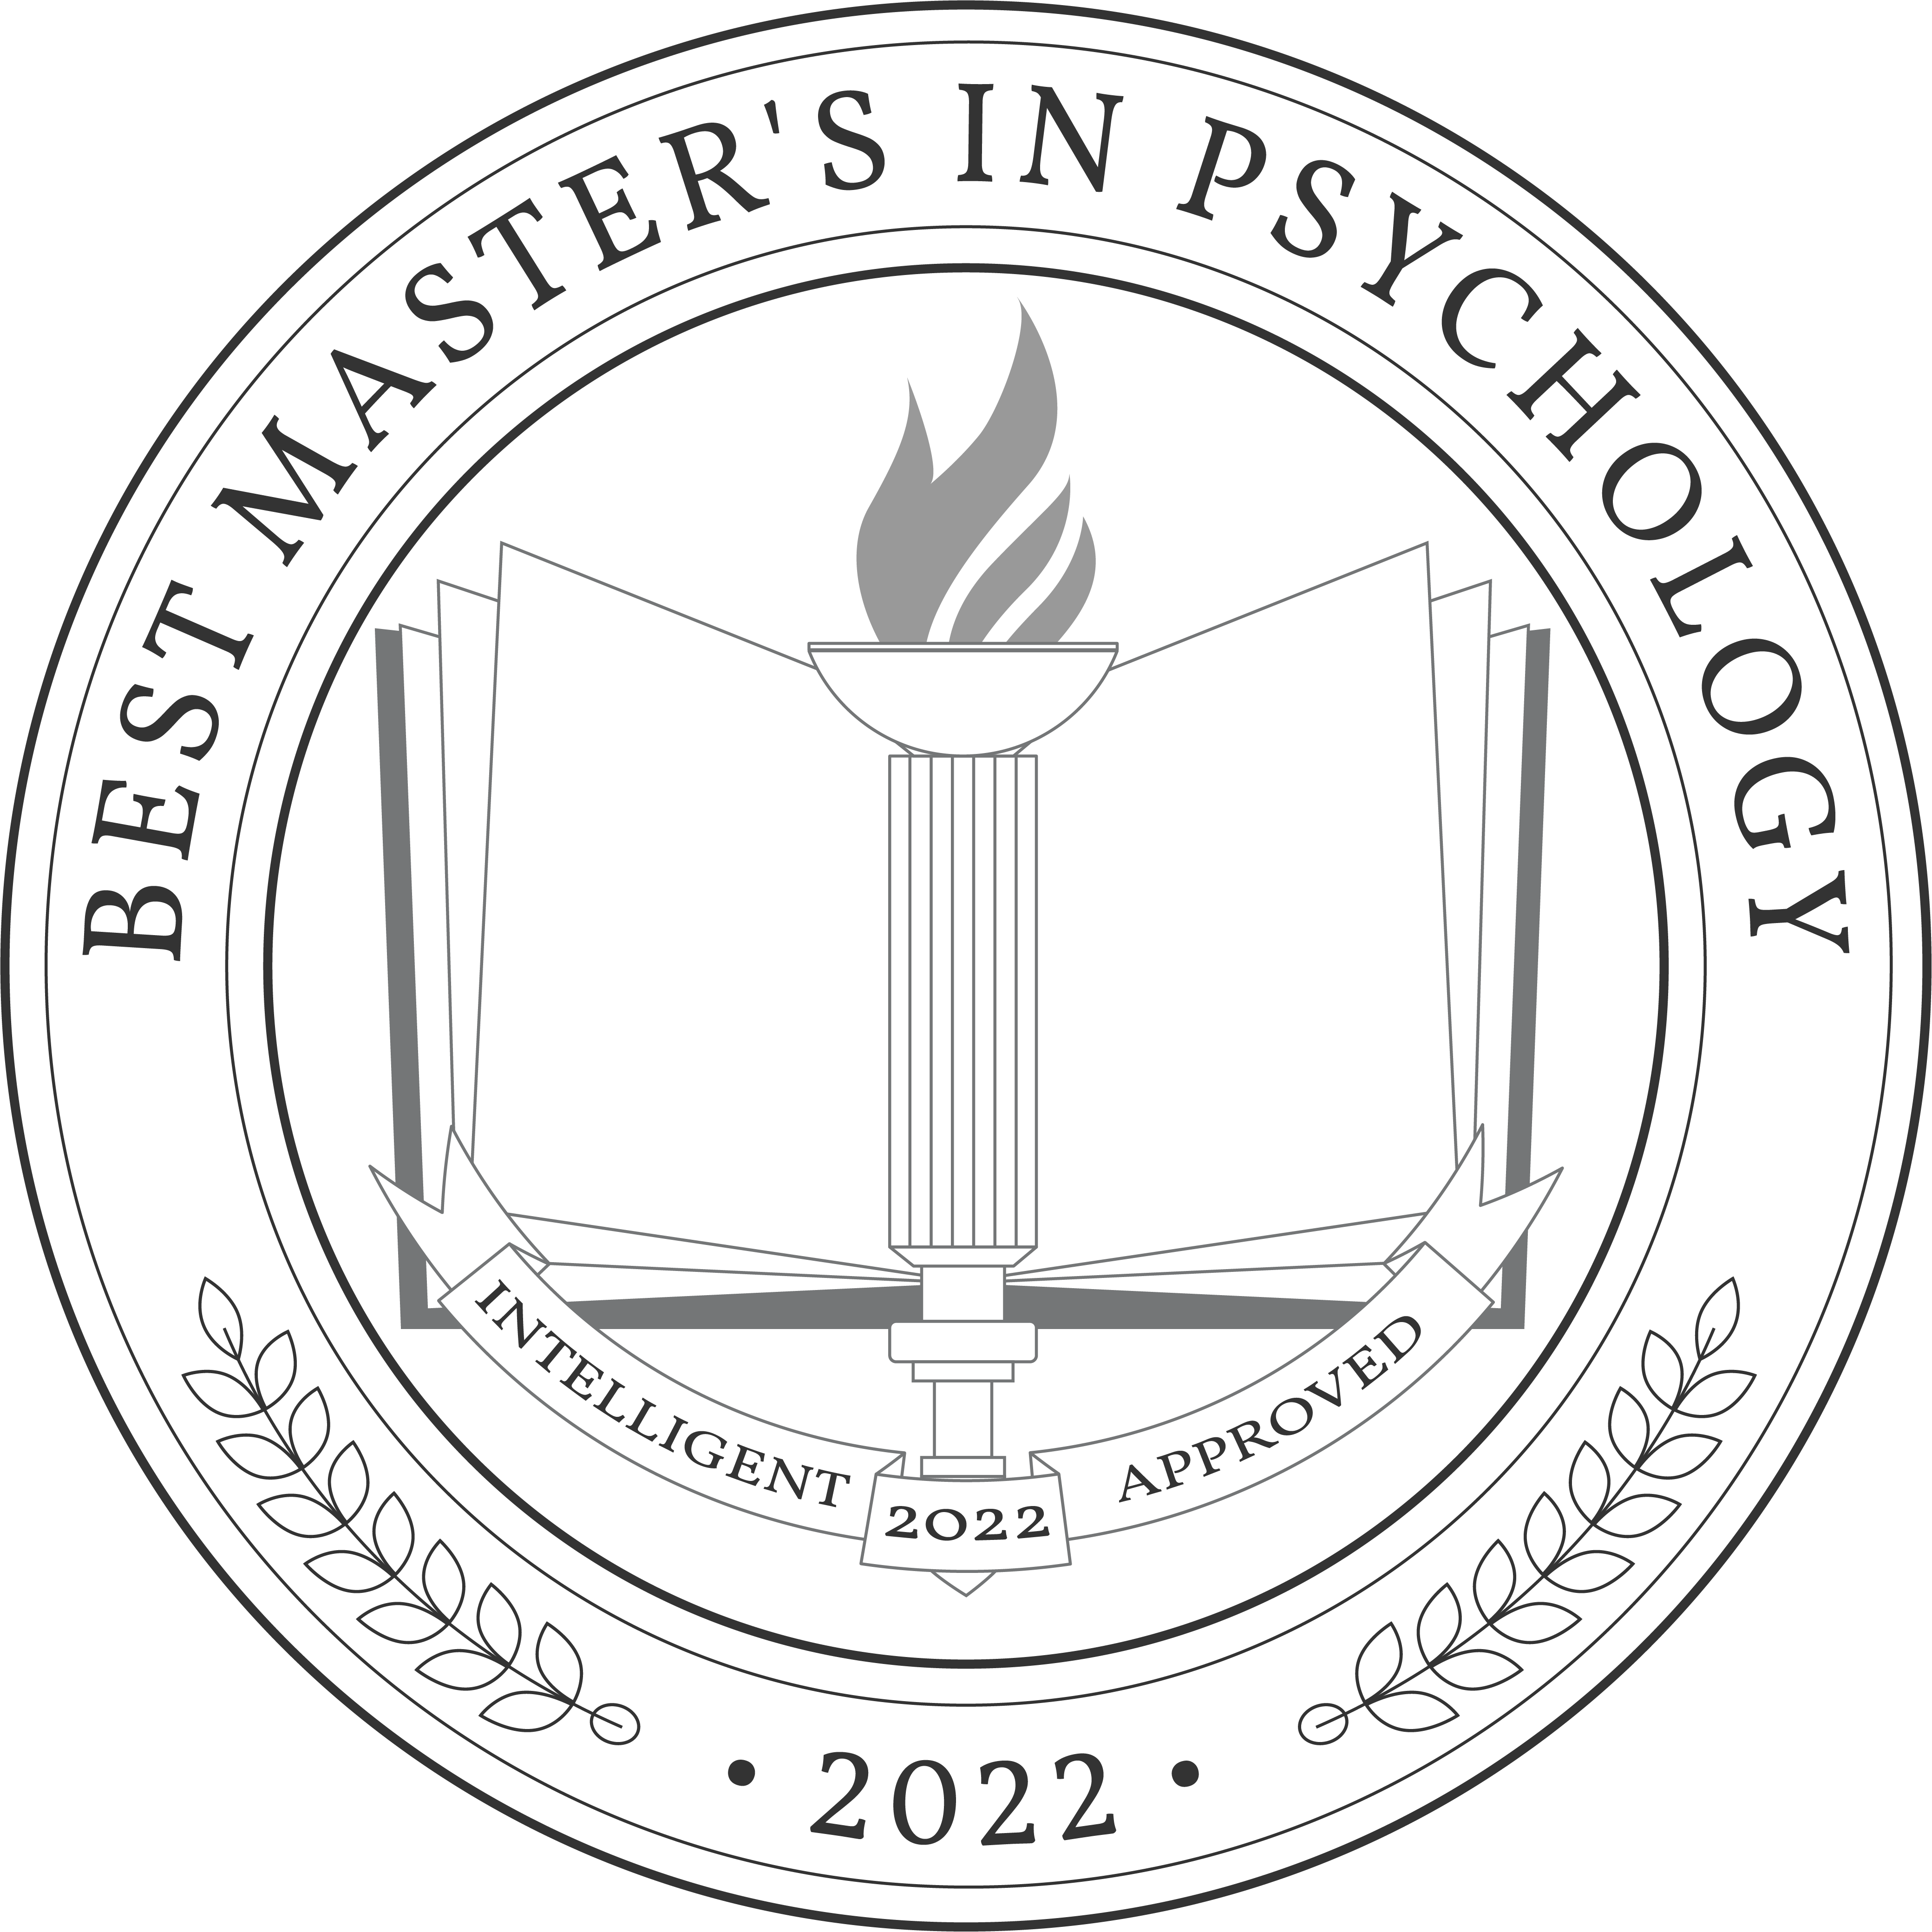 Best Master's in Psychology Badge